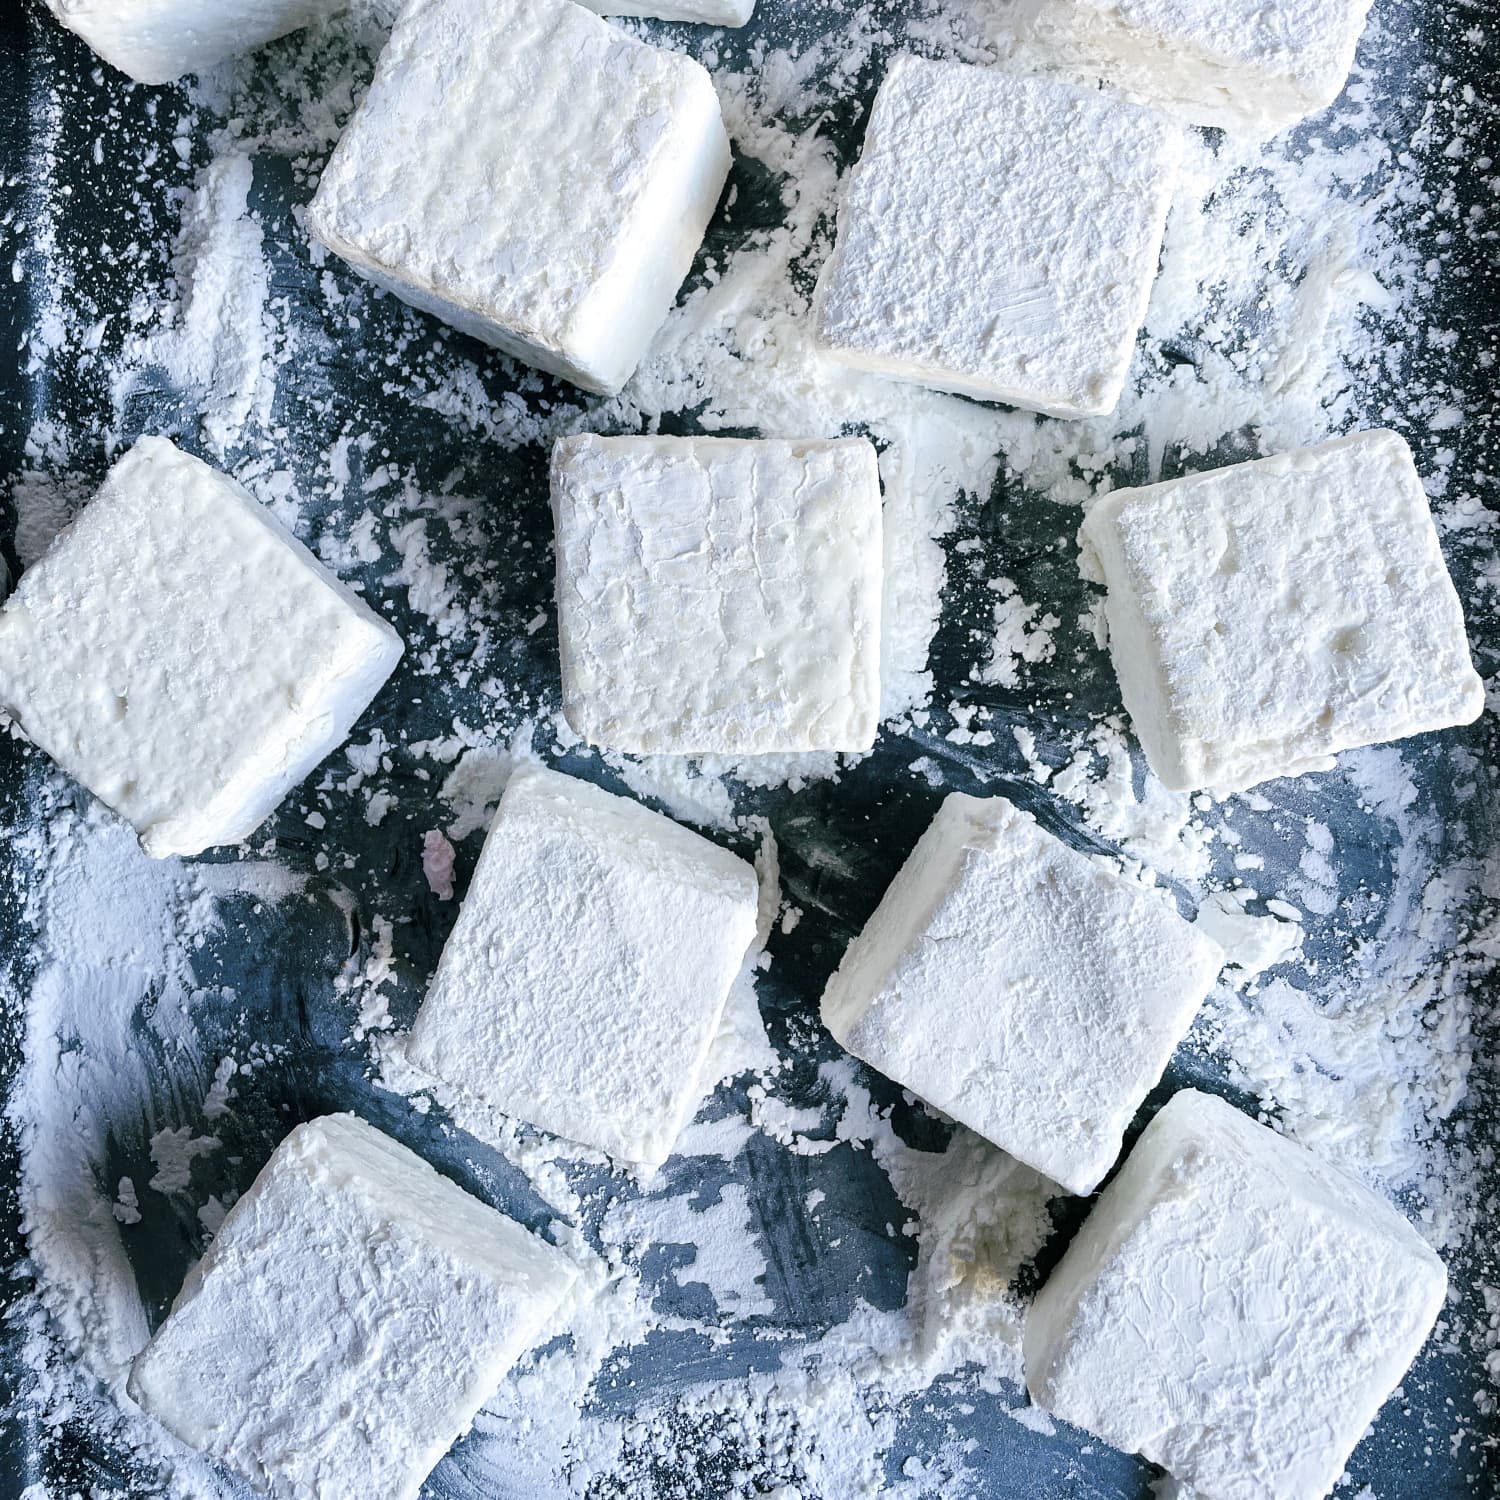 Marshmallows recipe